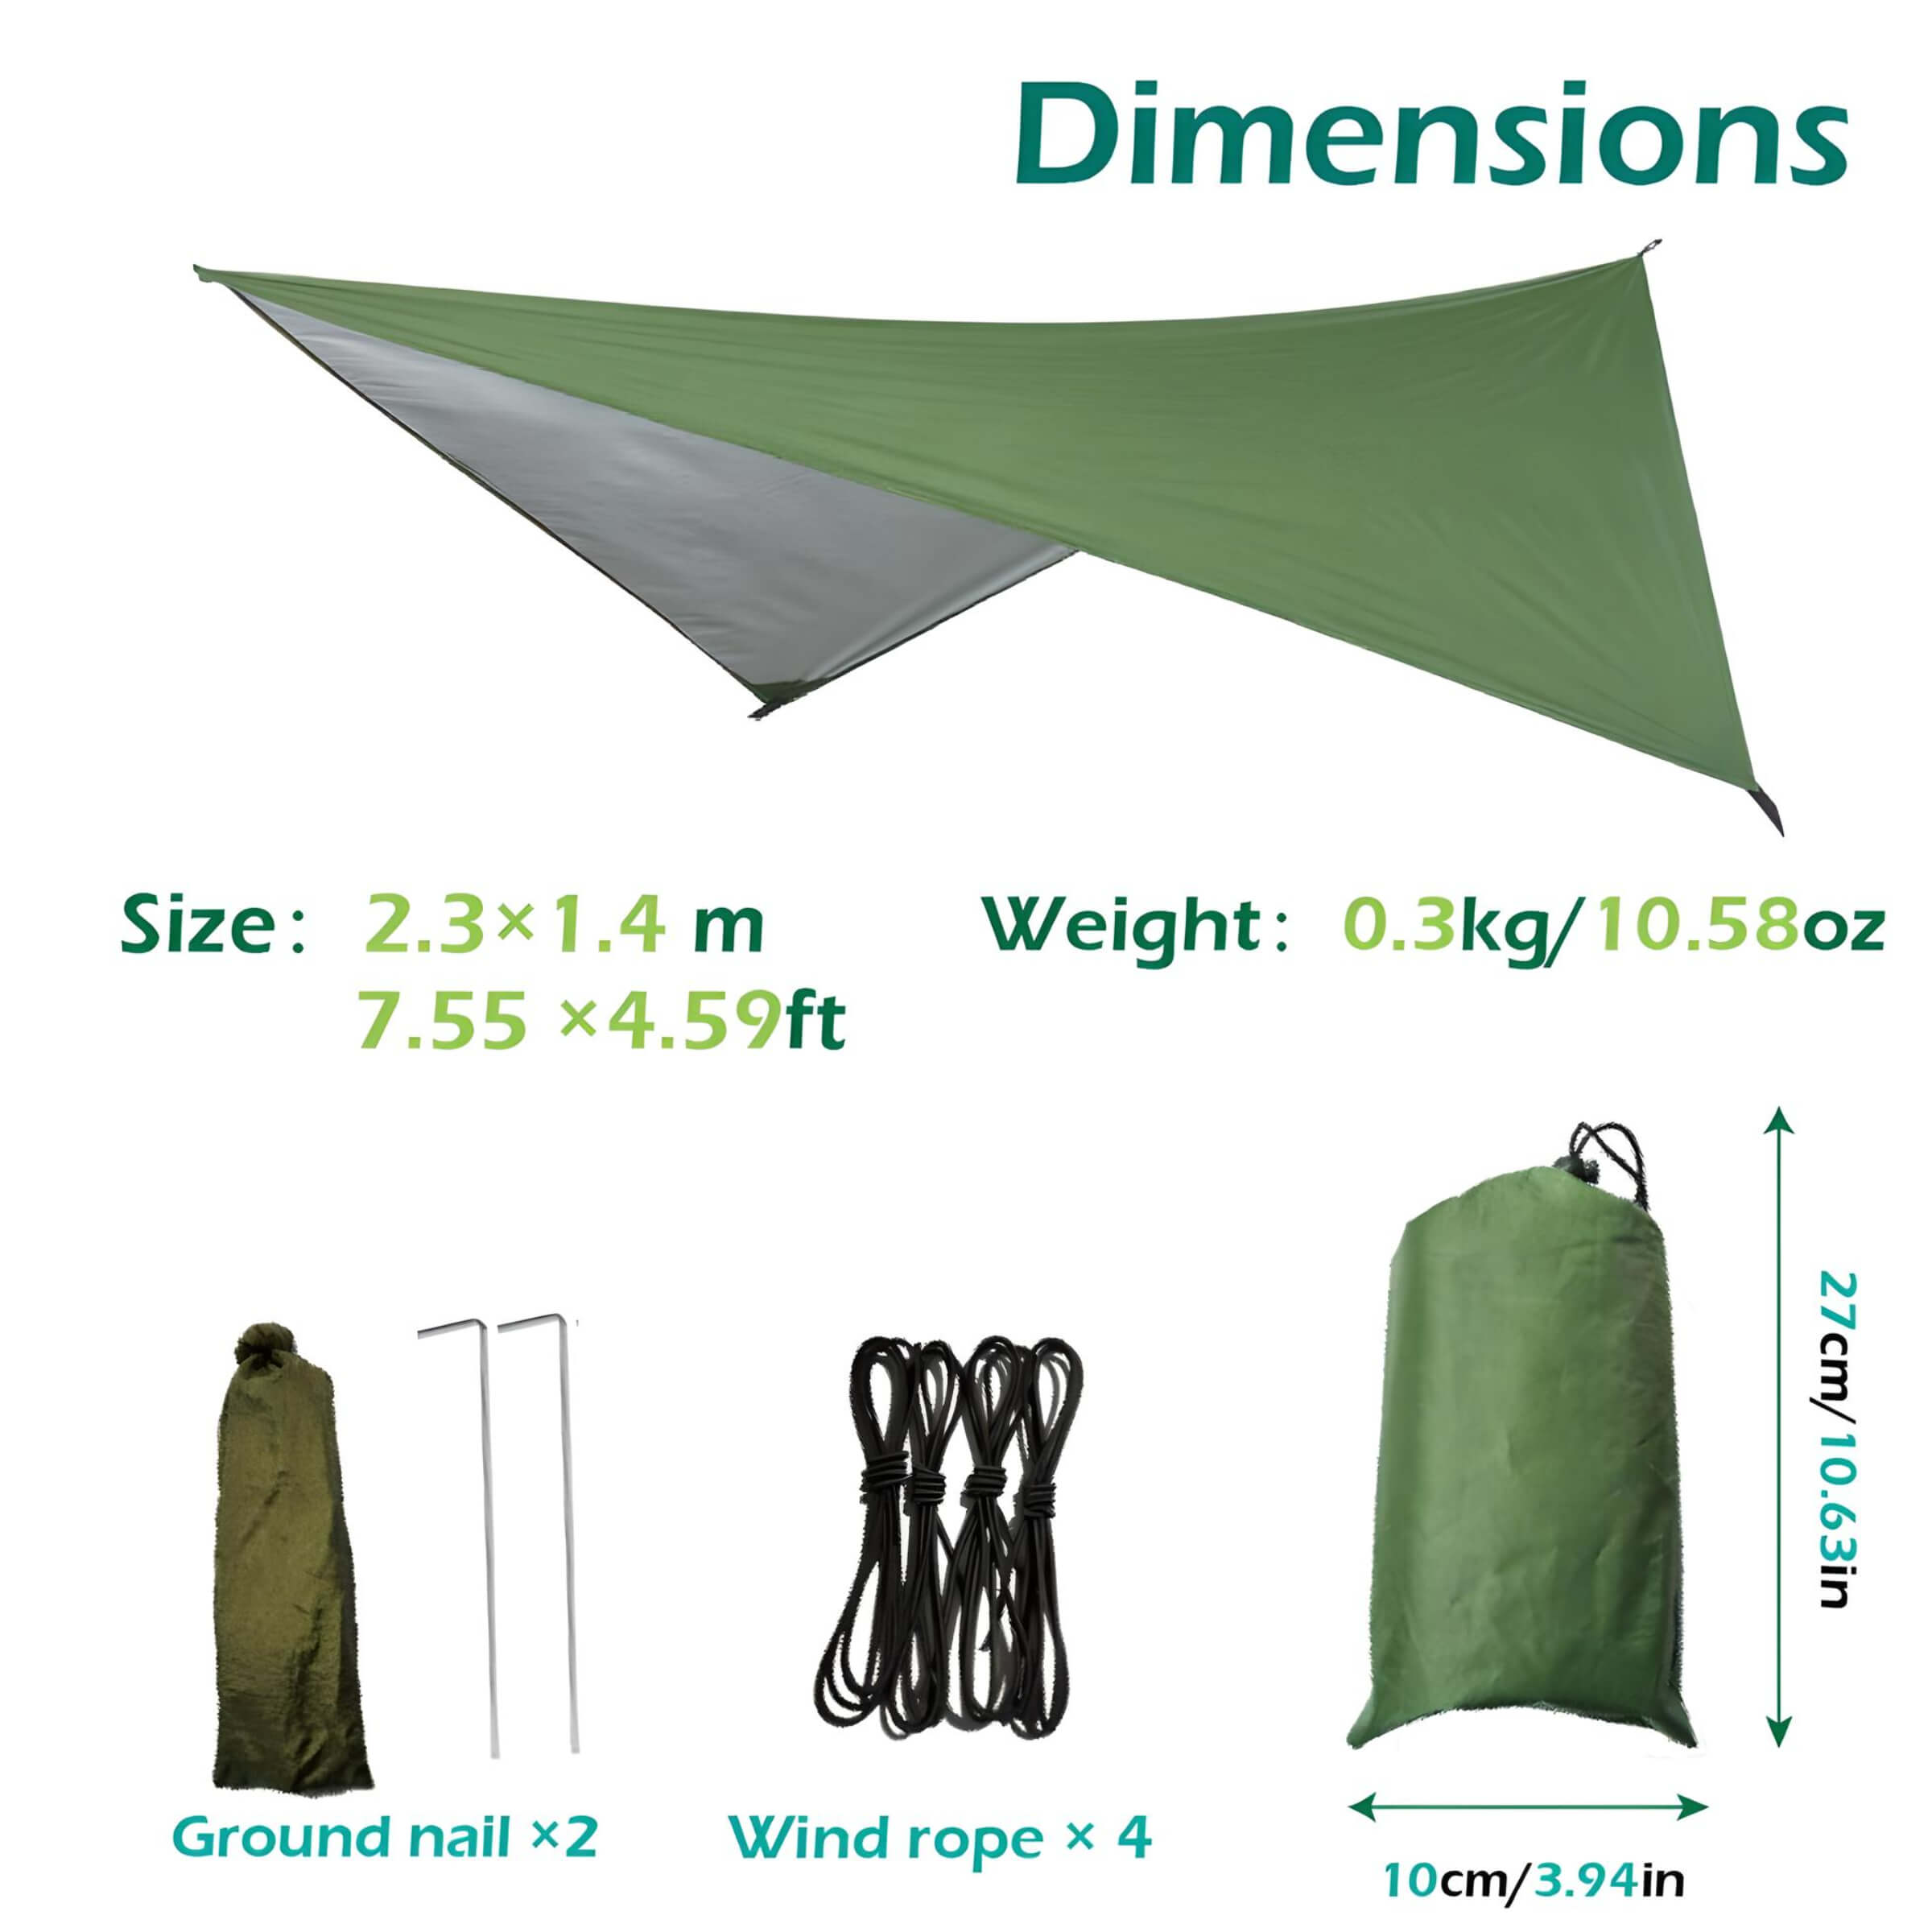    net-hammock-dimension-details